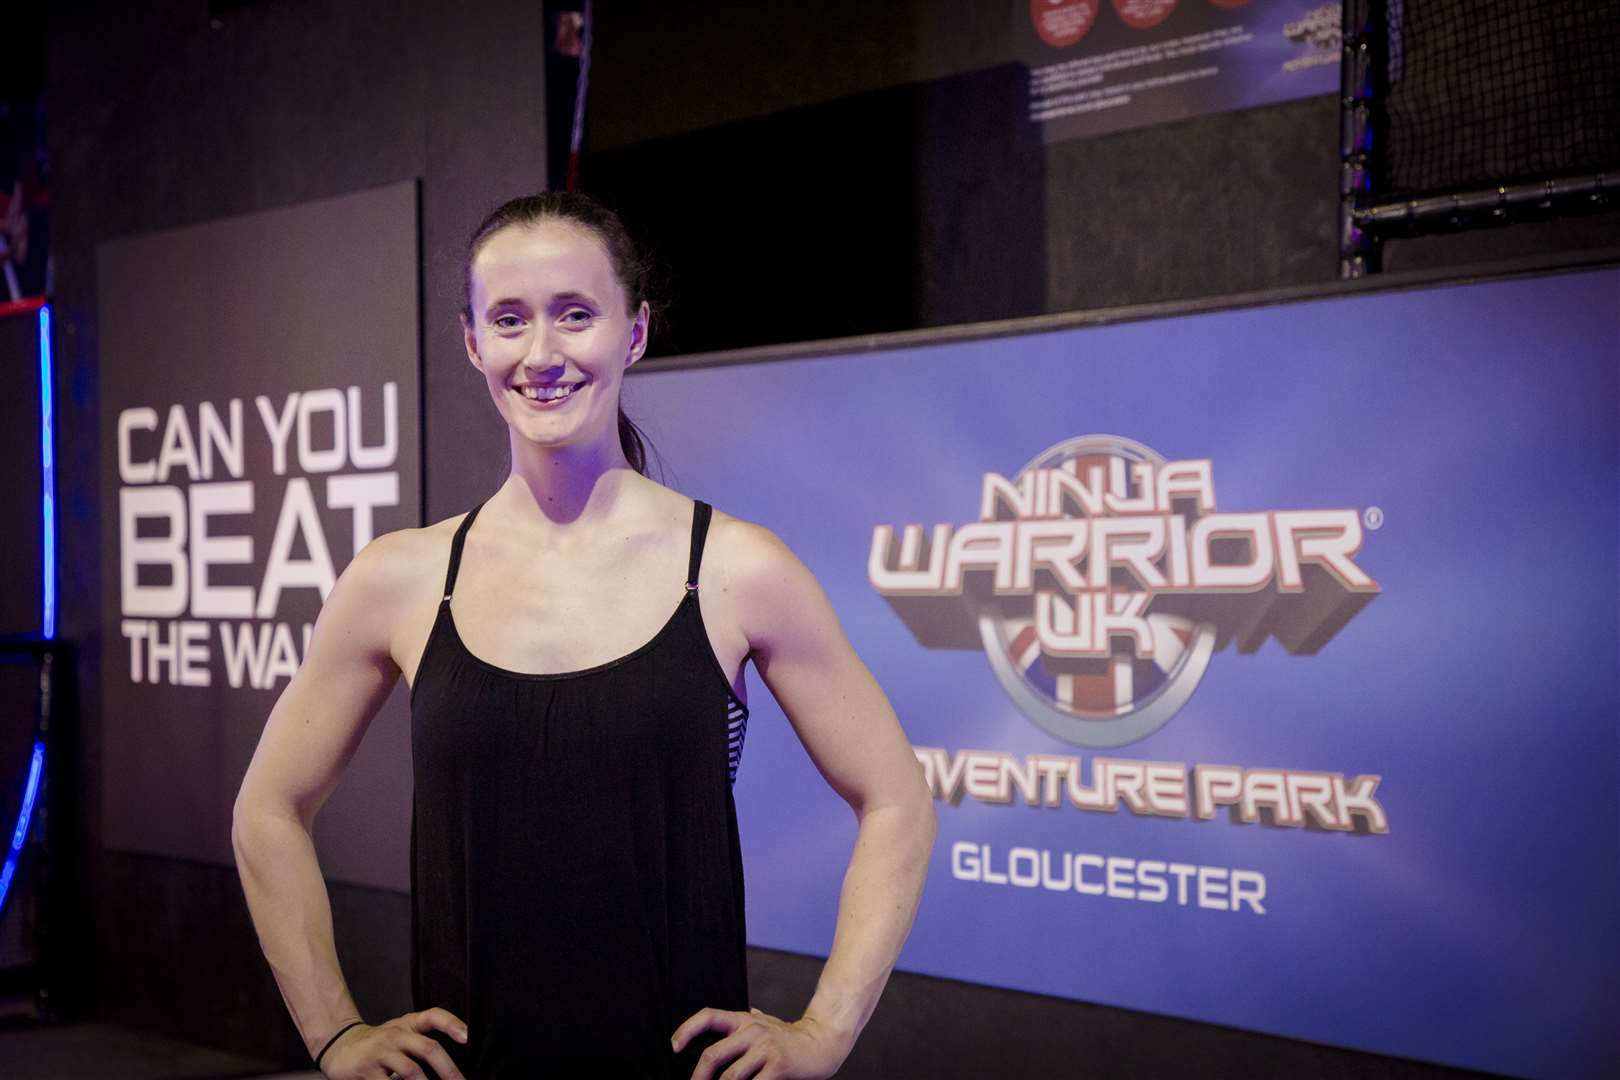 Beth Lodge winner of Ninja Warrior. Picture: ITV